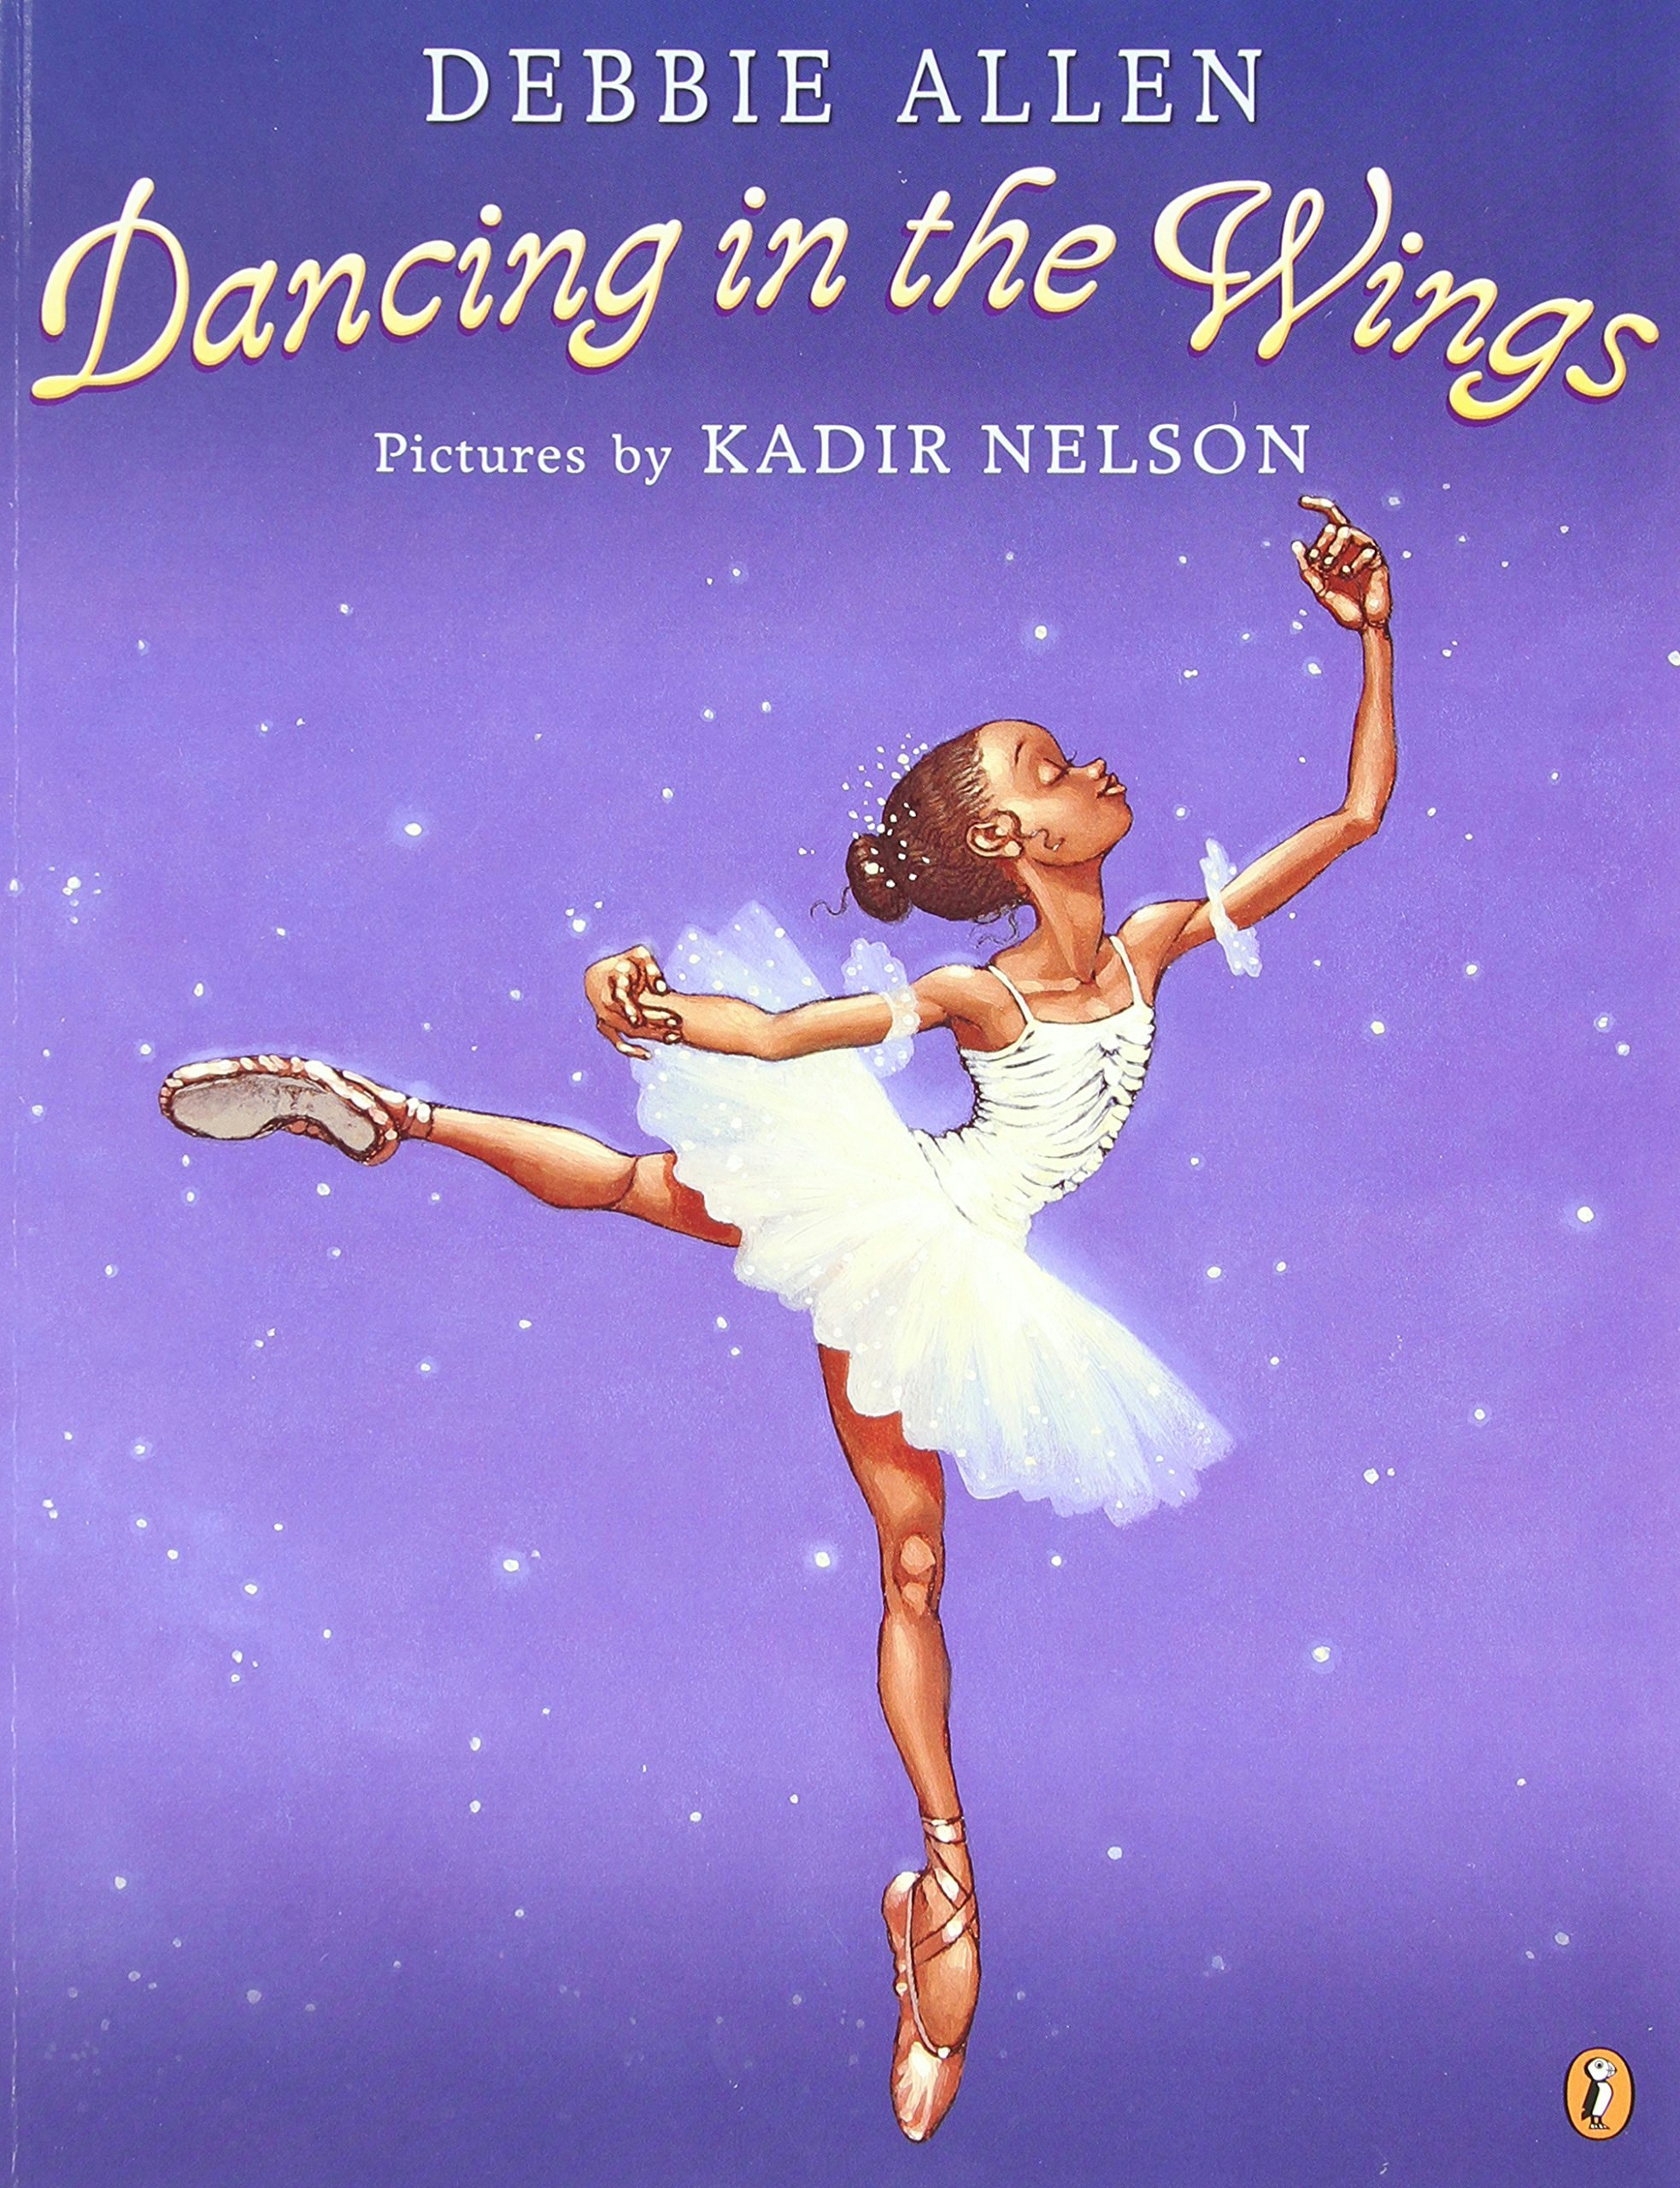 dancing in the wings by debbie allen